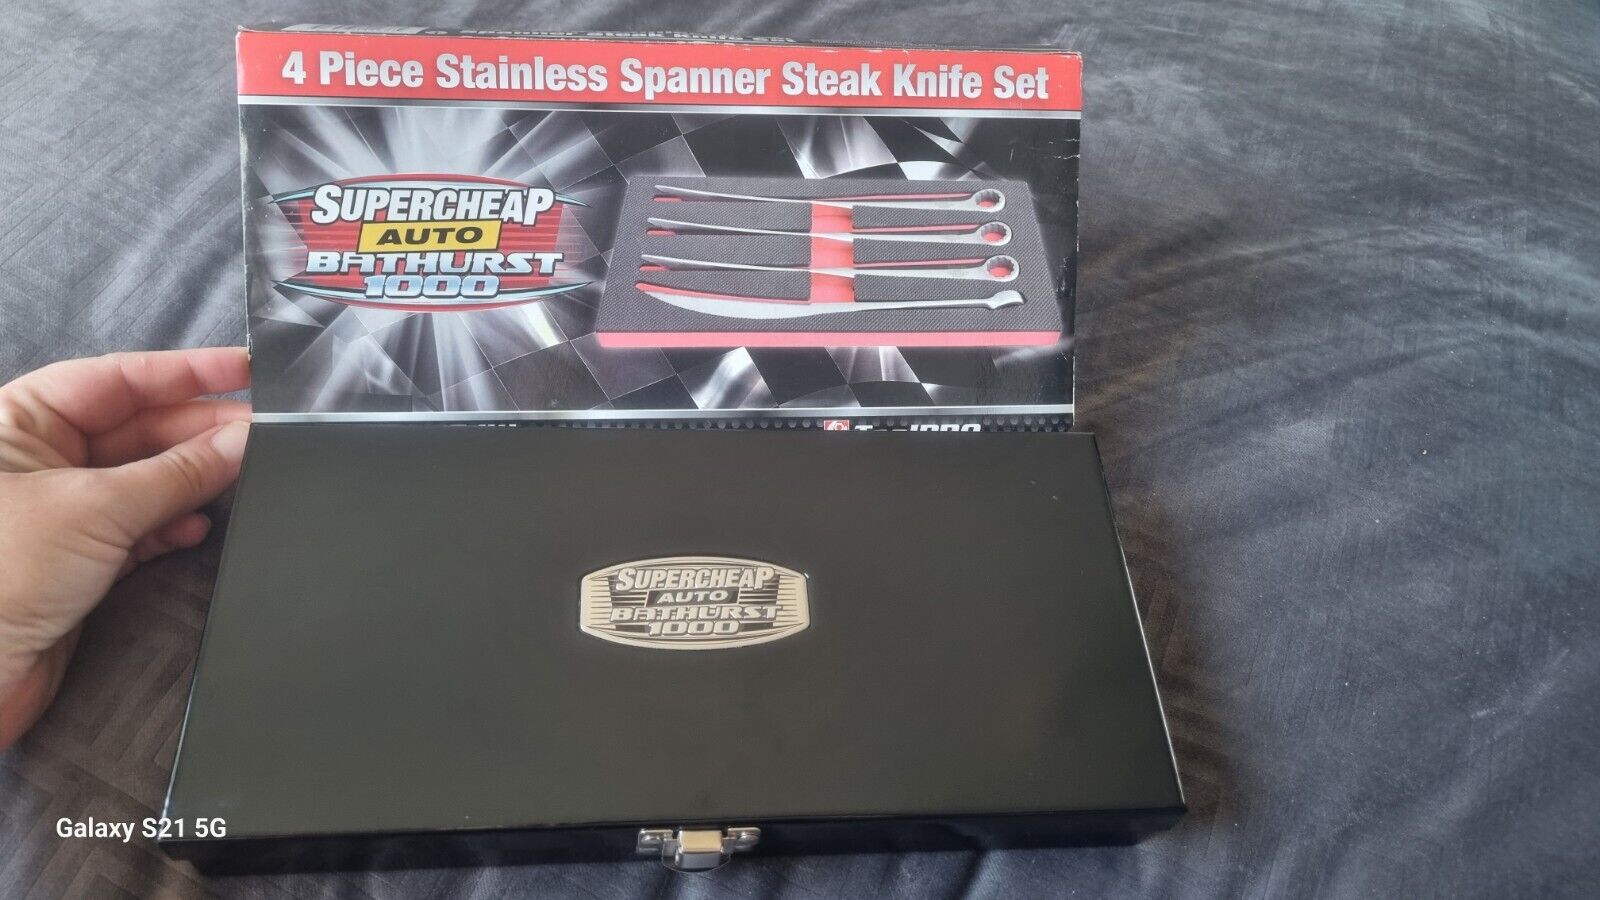 4 piece stainless spanner steak knife set